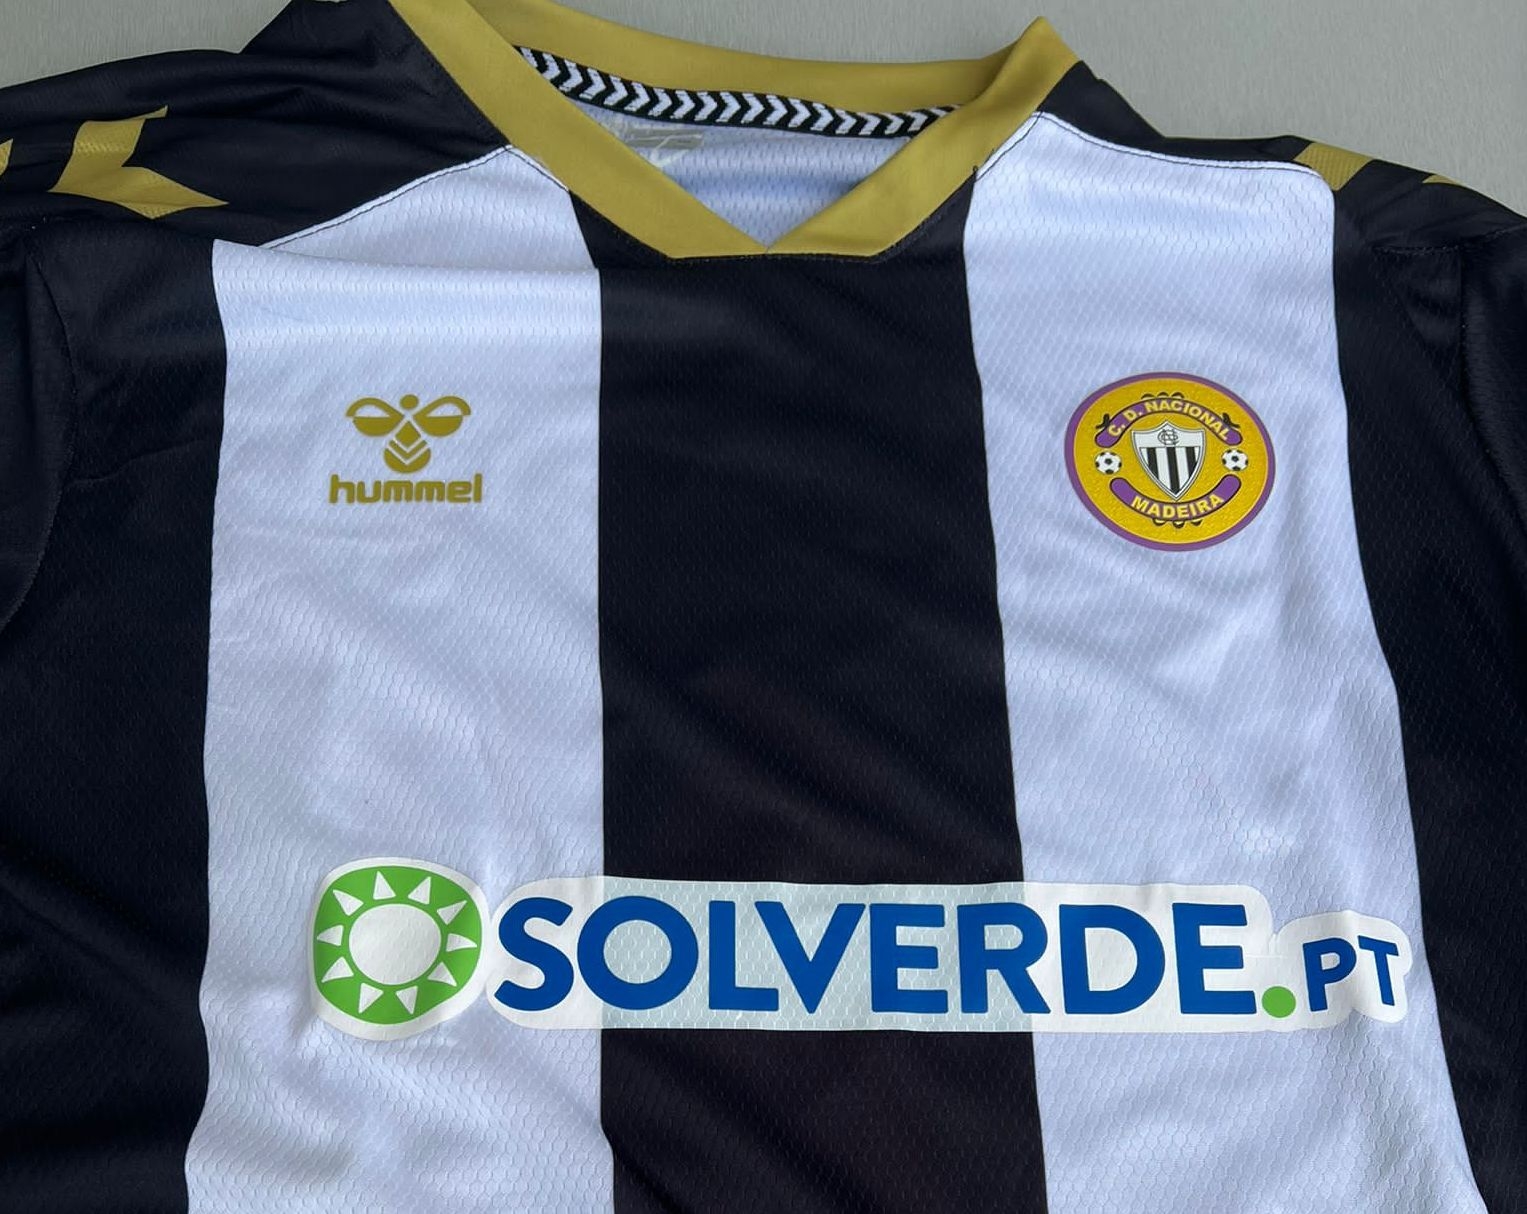 Solverde.pt patrocina dez clubes, incluindo a equipa feminina Valadares -  Meios & Publicidade - Meios & Publicidade